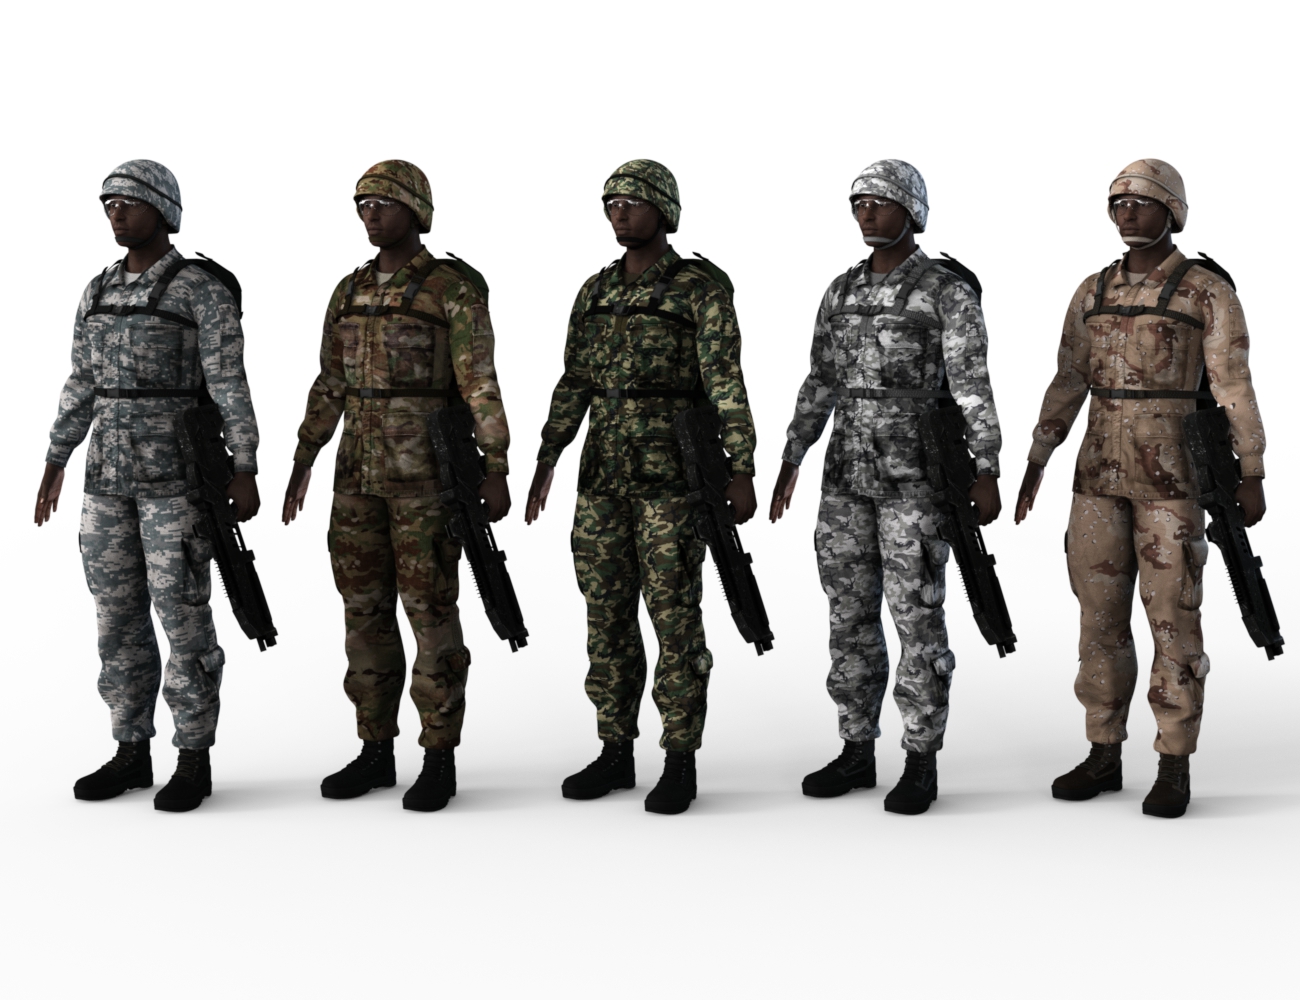 FBX- Dash Army Uniform by: Paleo, 3D Models by Daz 3D